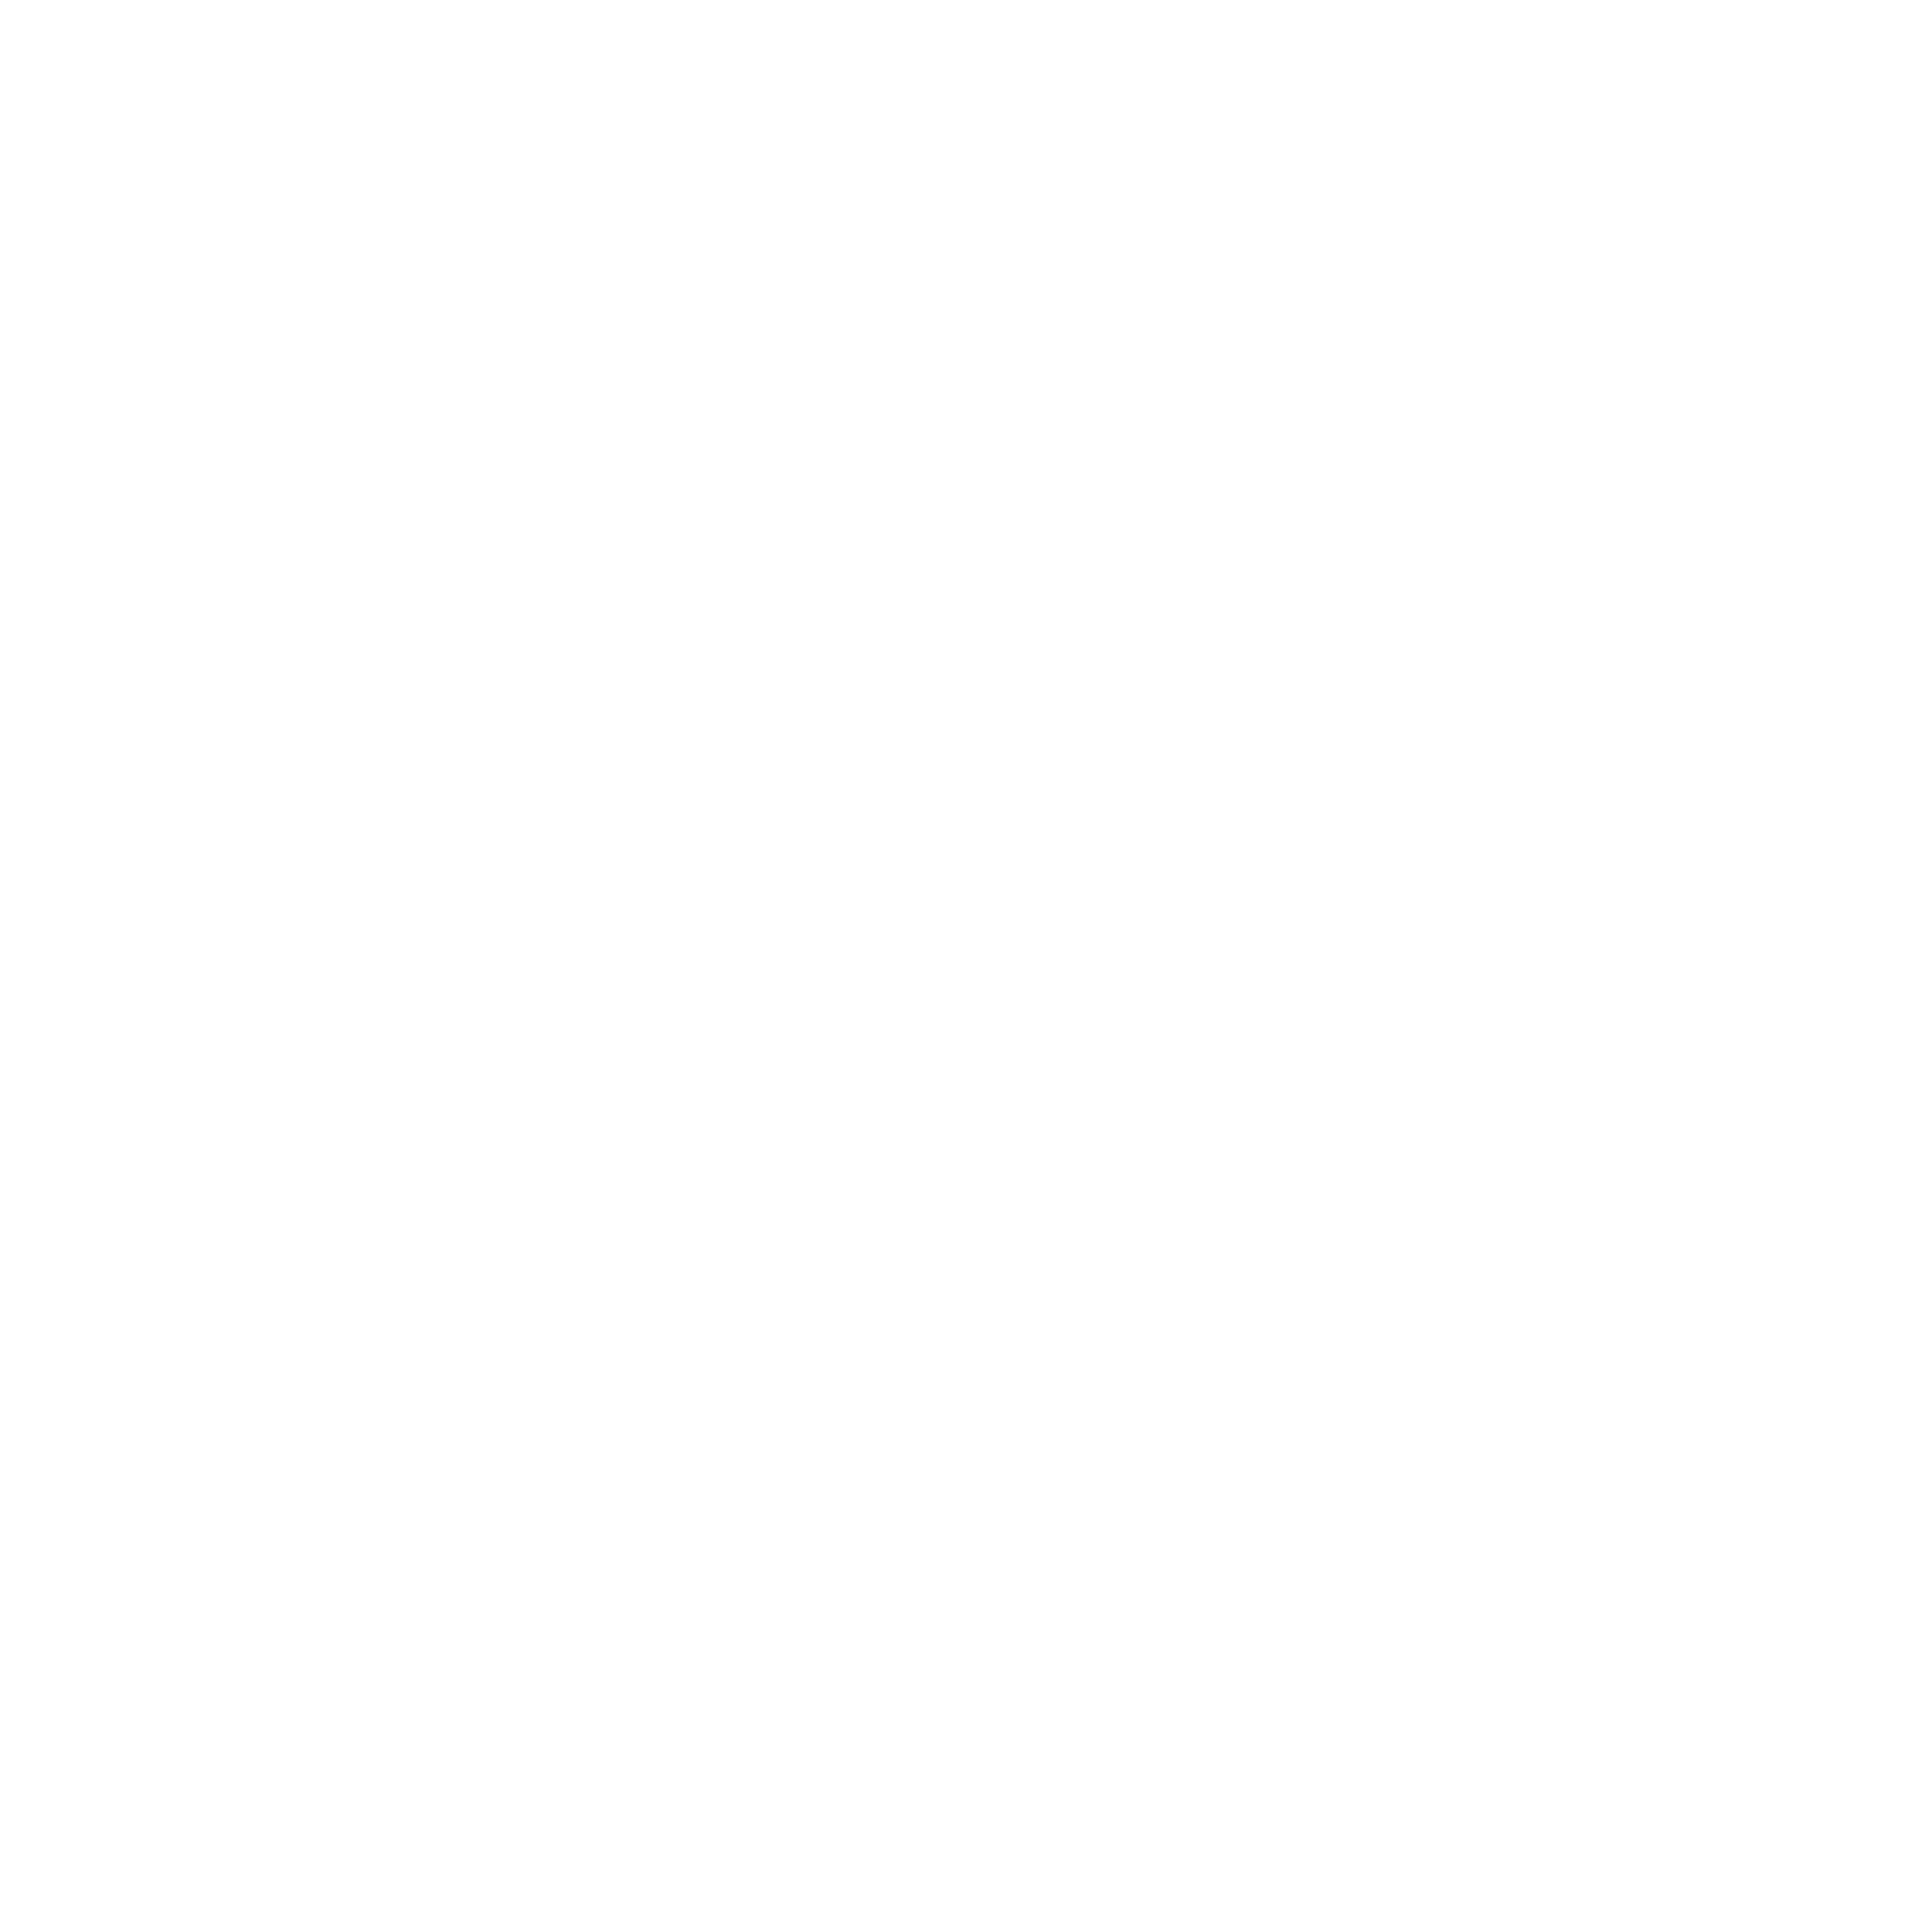 Central Asia Forum